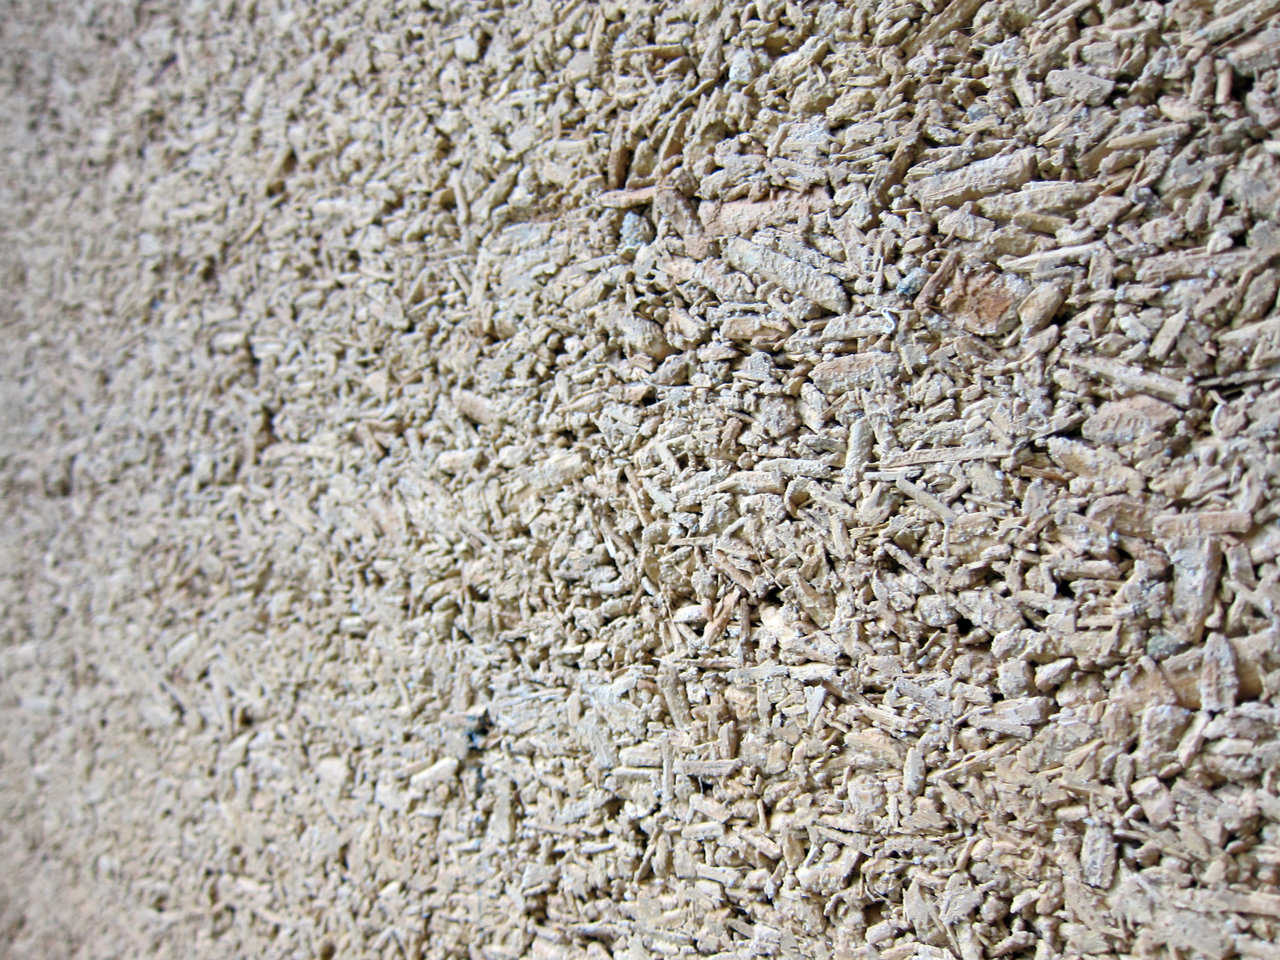 Hemp fibers embedded in lime (usually cement) binders forms hempcrete.